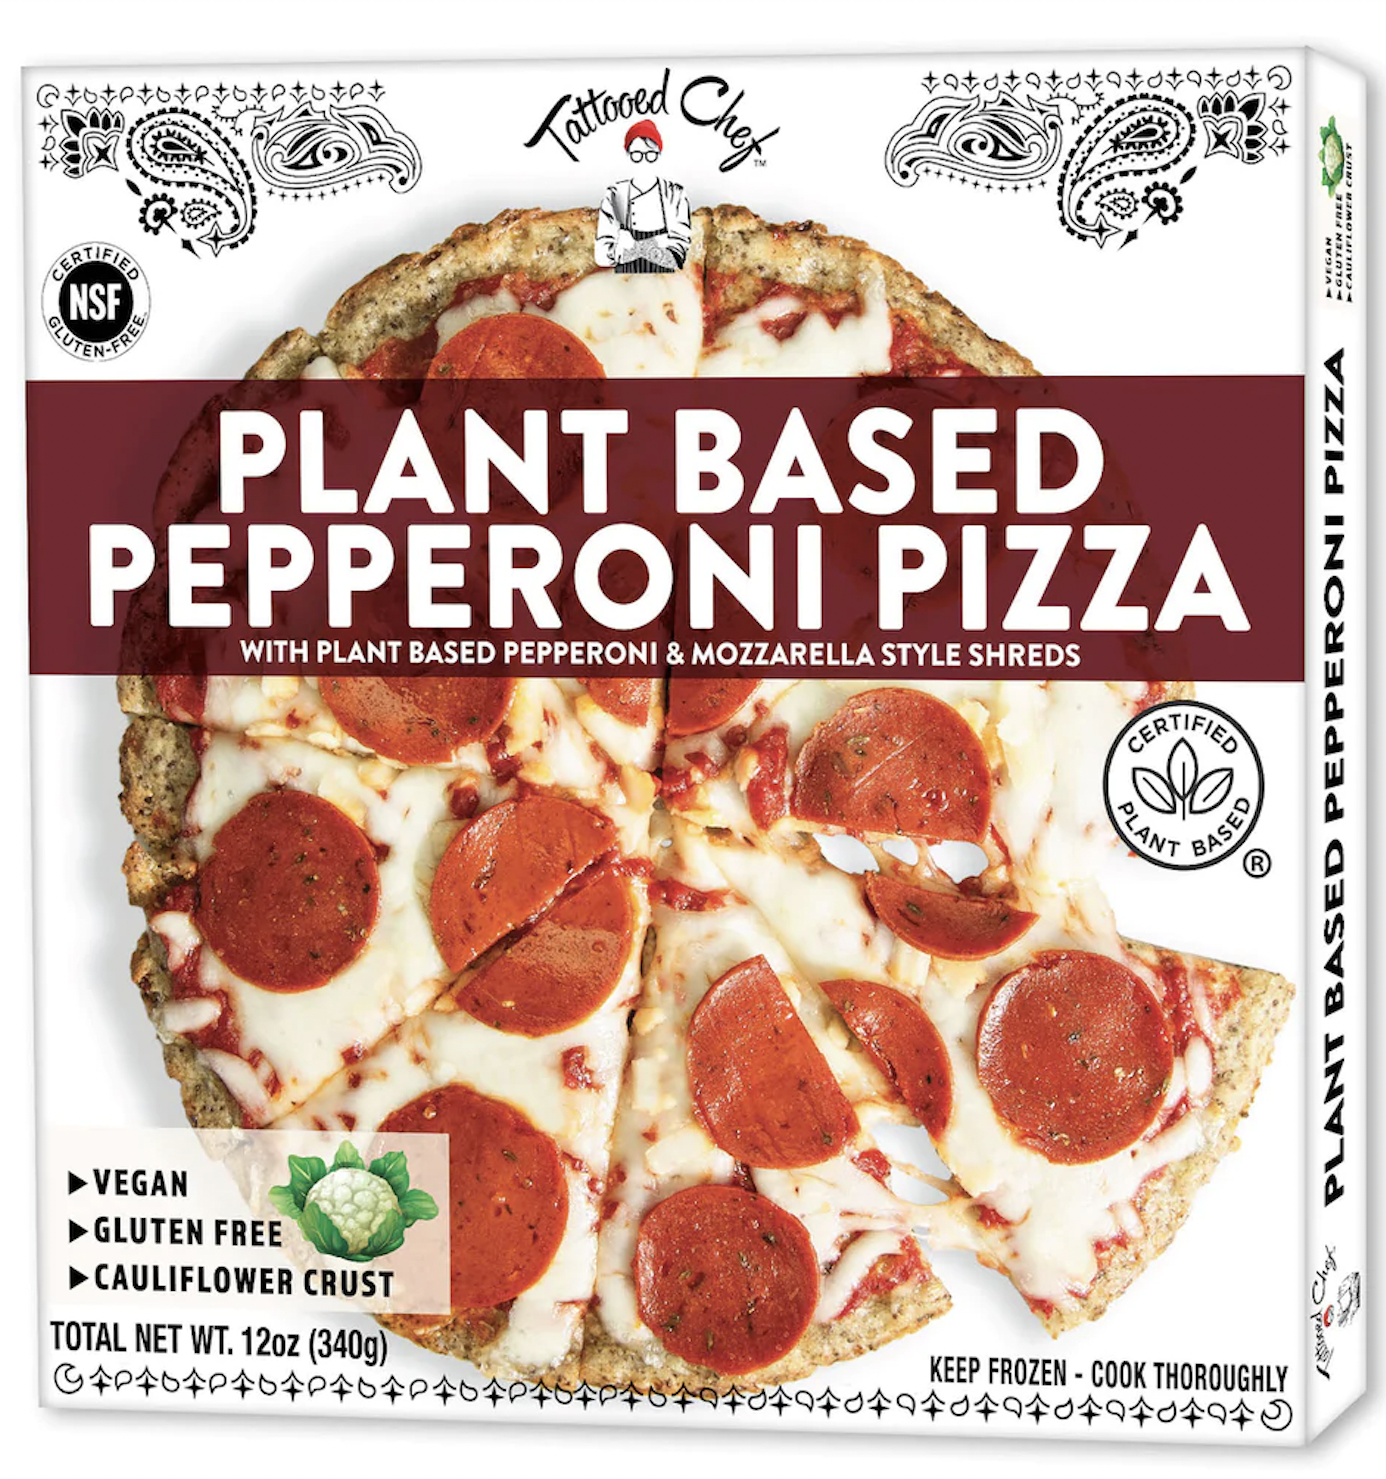 a box with a pepperoni pziza on it